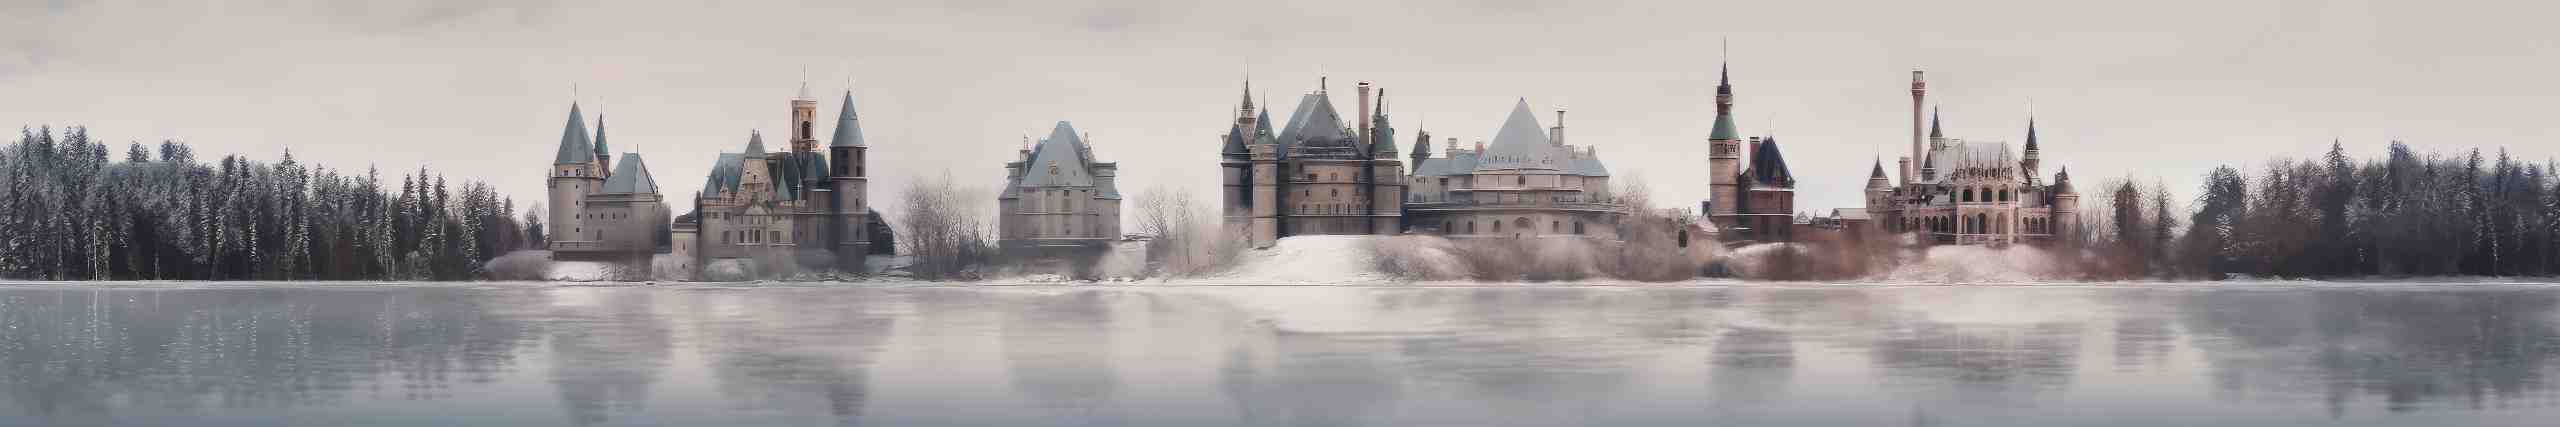 Dark Academia Aesthetic Castle Landscape in Winter